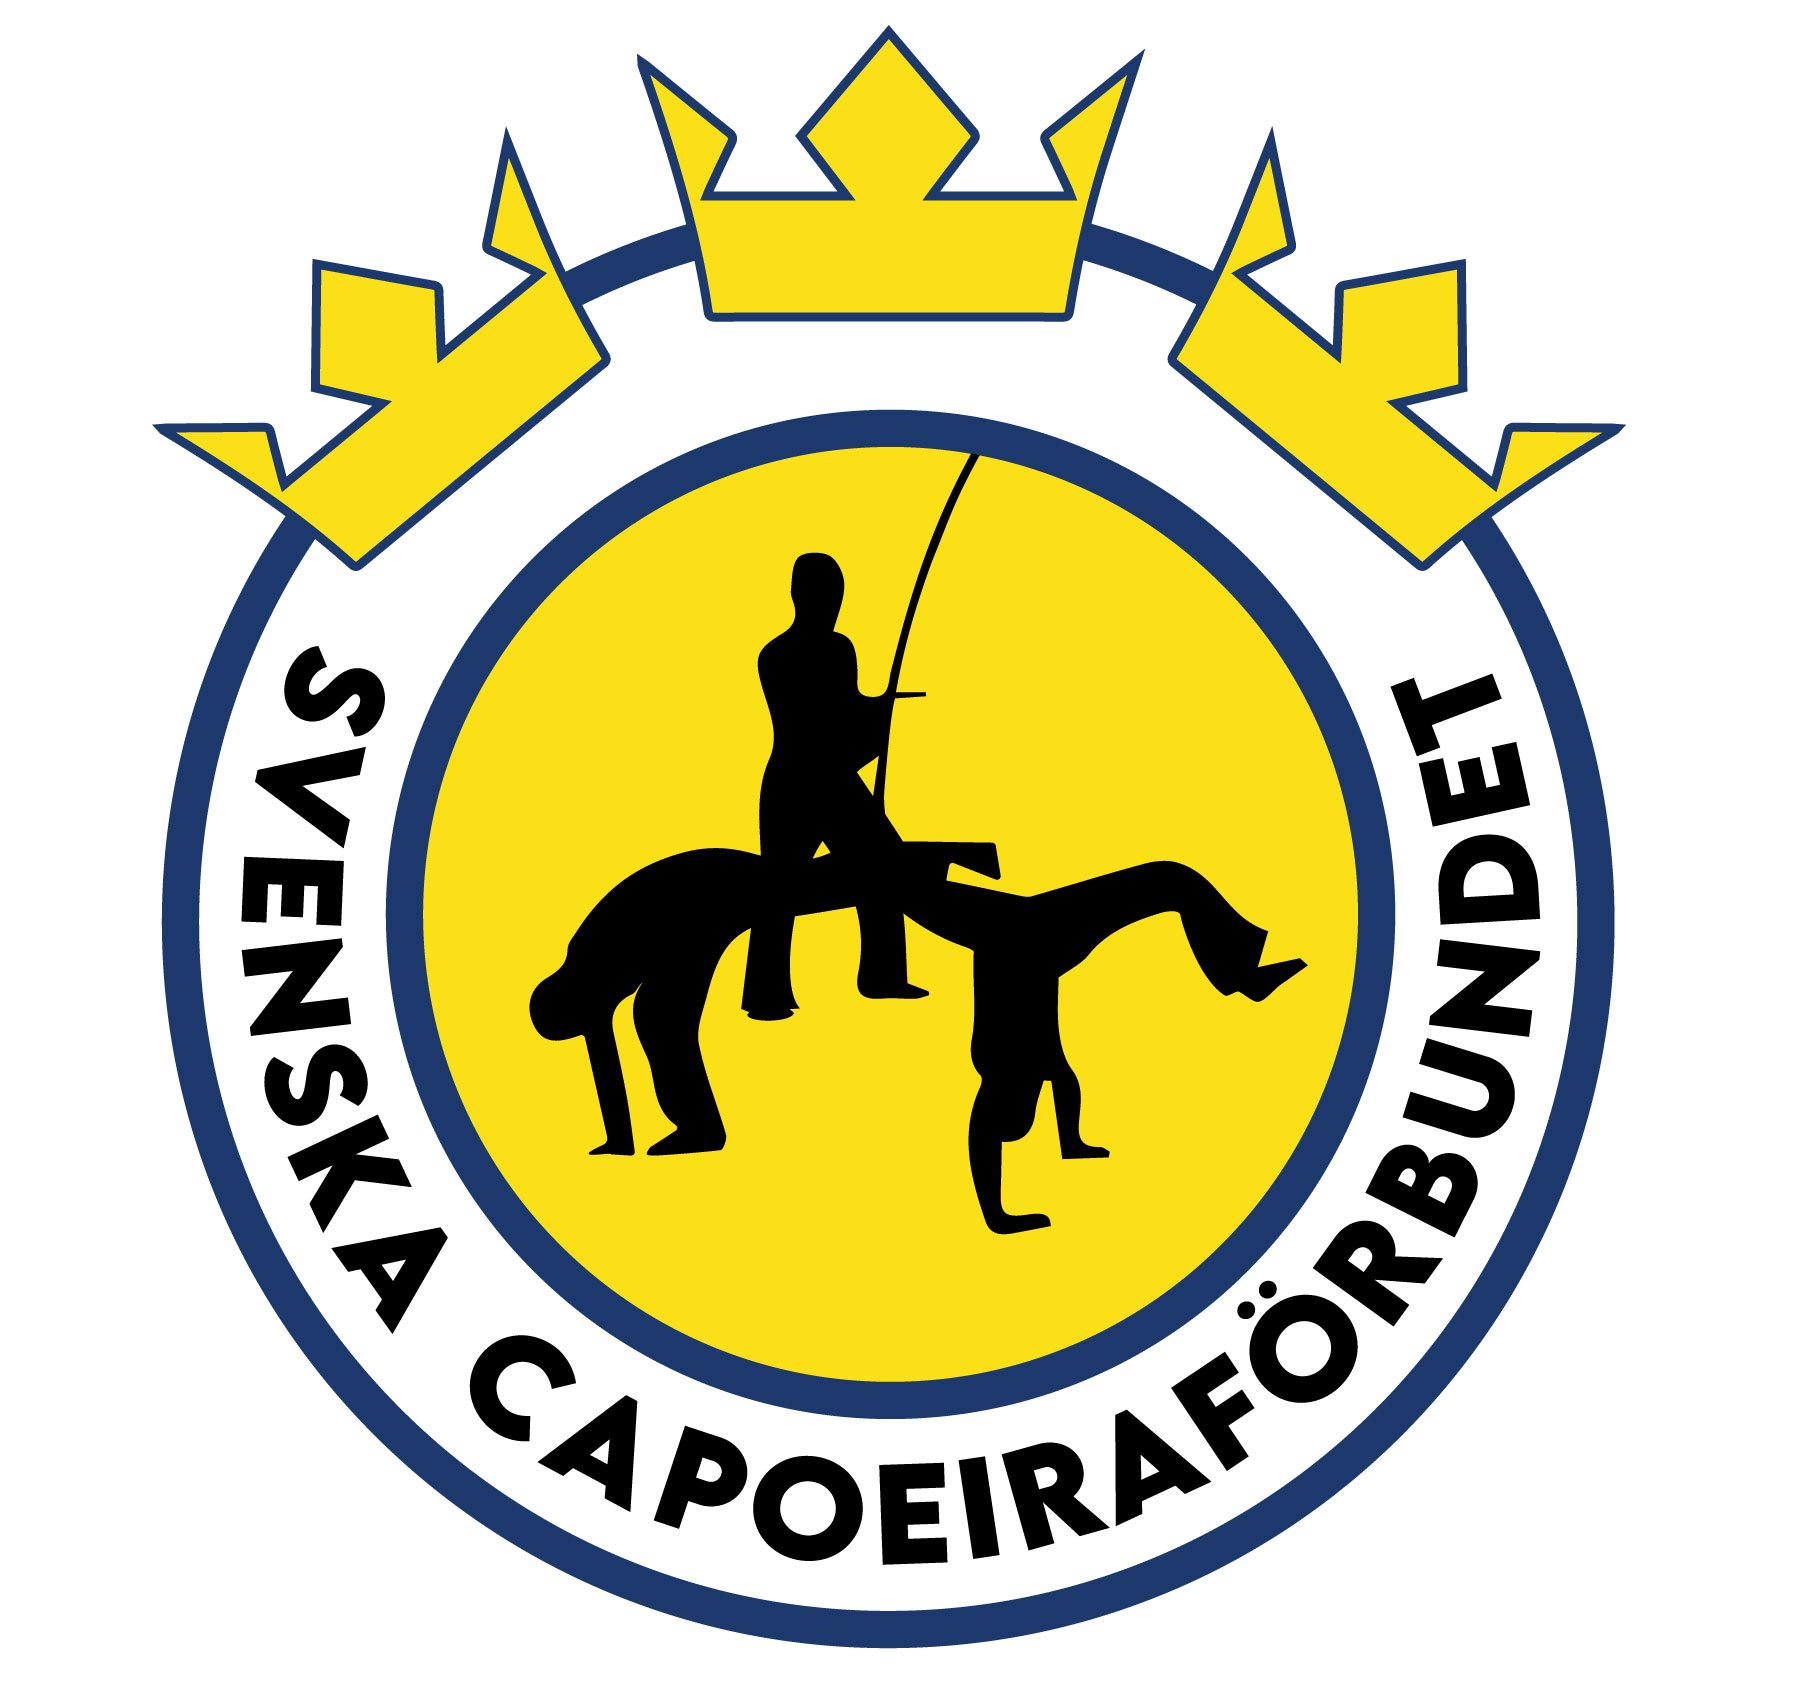 Swedish Capoeira Federation